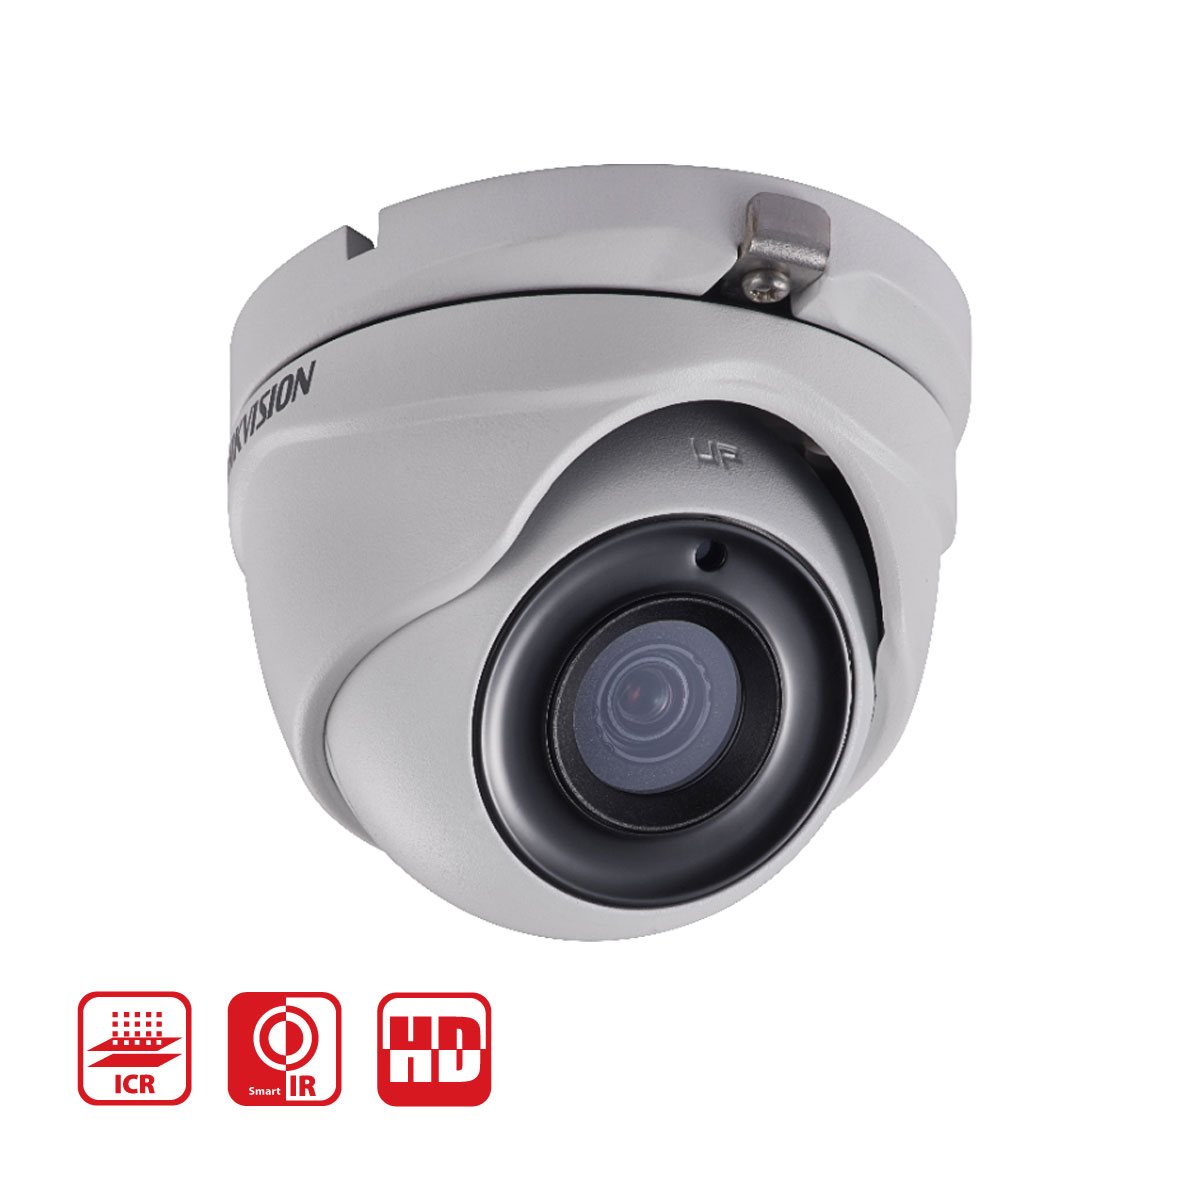 Camera Hikvision DS-2CE56H0T-ITM 5MP, IP67, hồng ngoại thông minh 20m